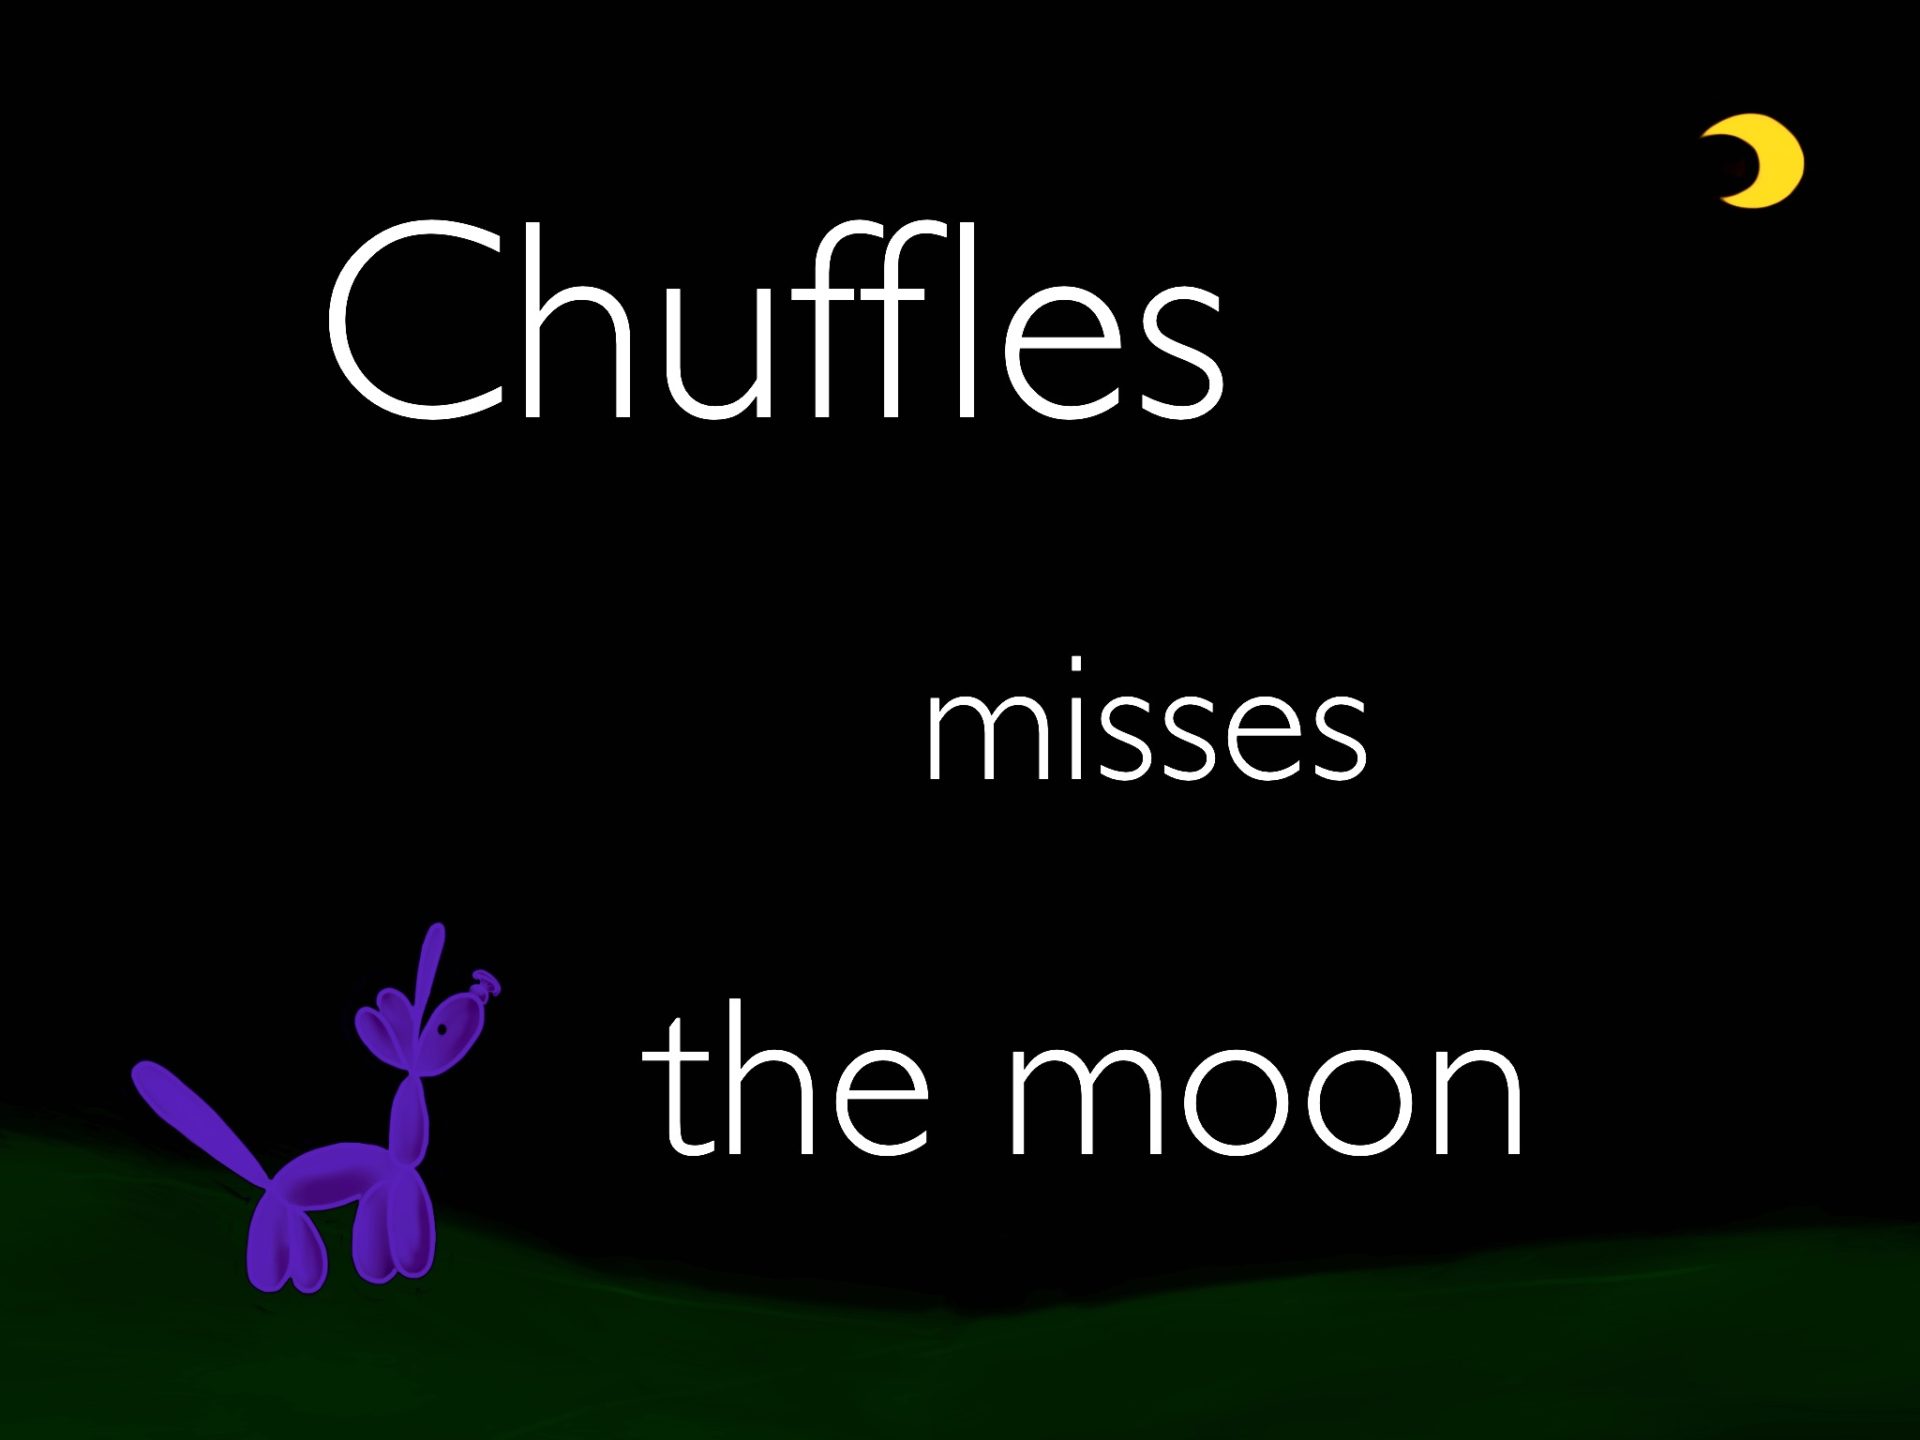 Chuffles the Balloon Unicorn gazes up at the moon.